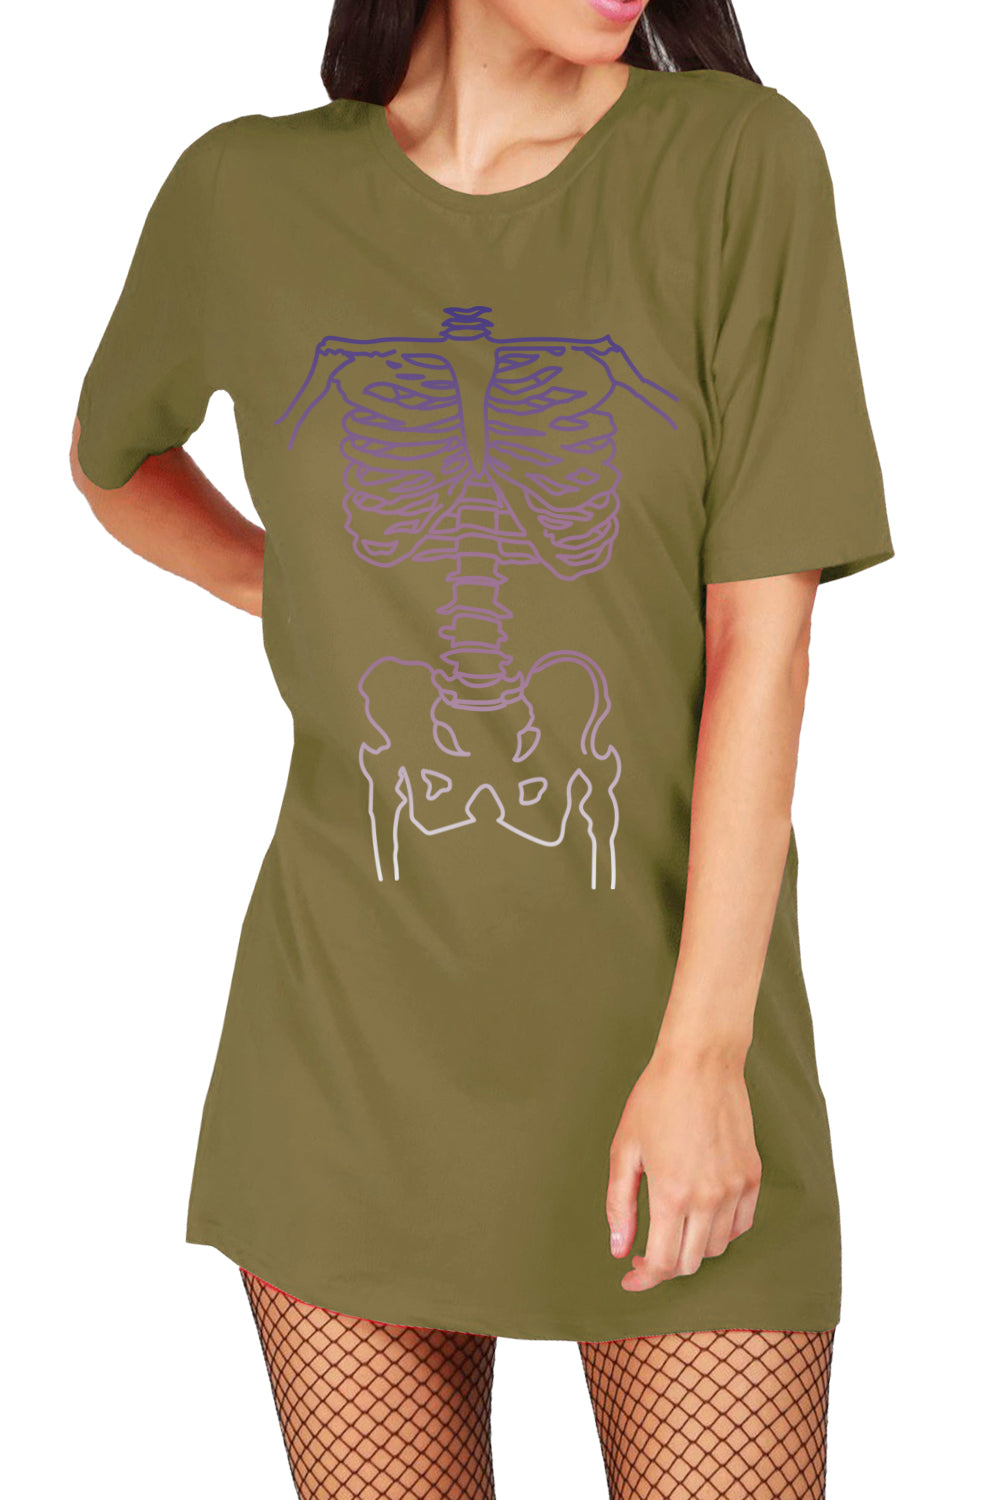 Clare X-Ray Skeleton Bone Tunic T Shirt Dress